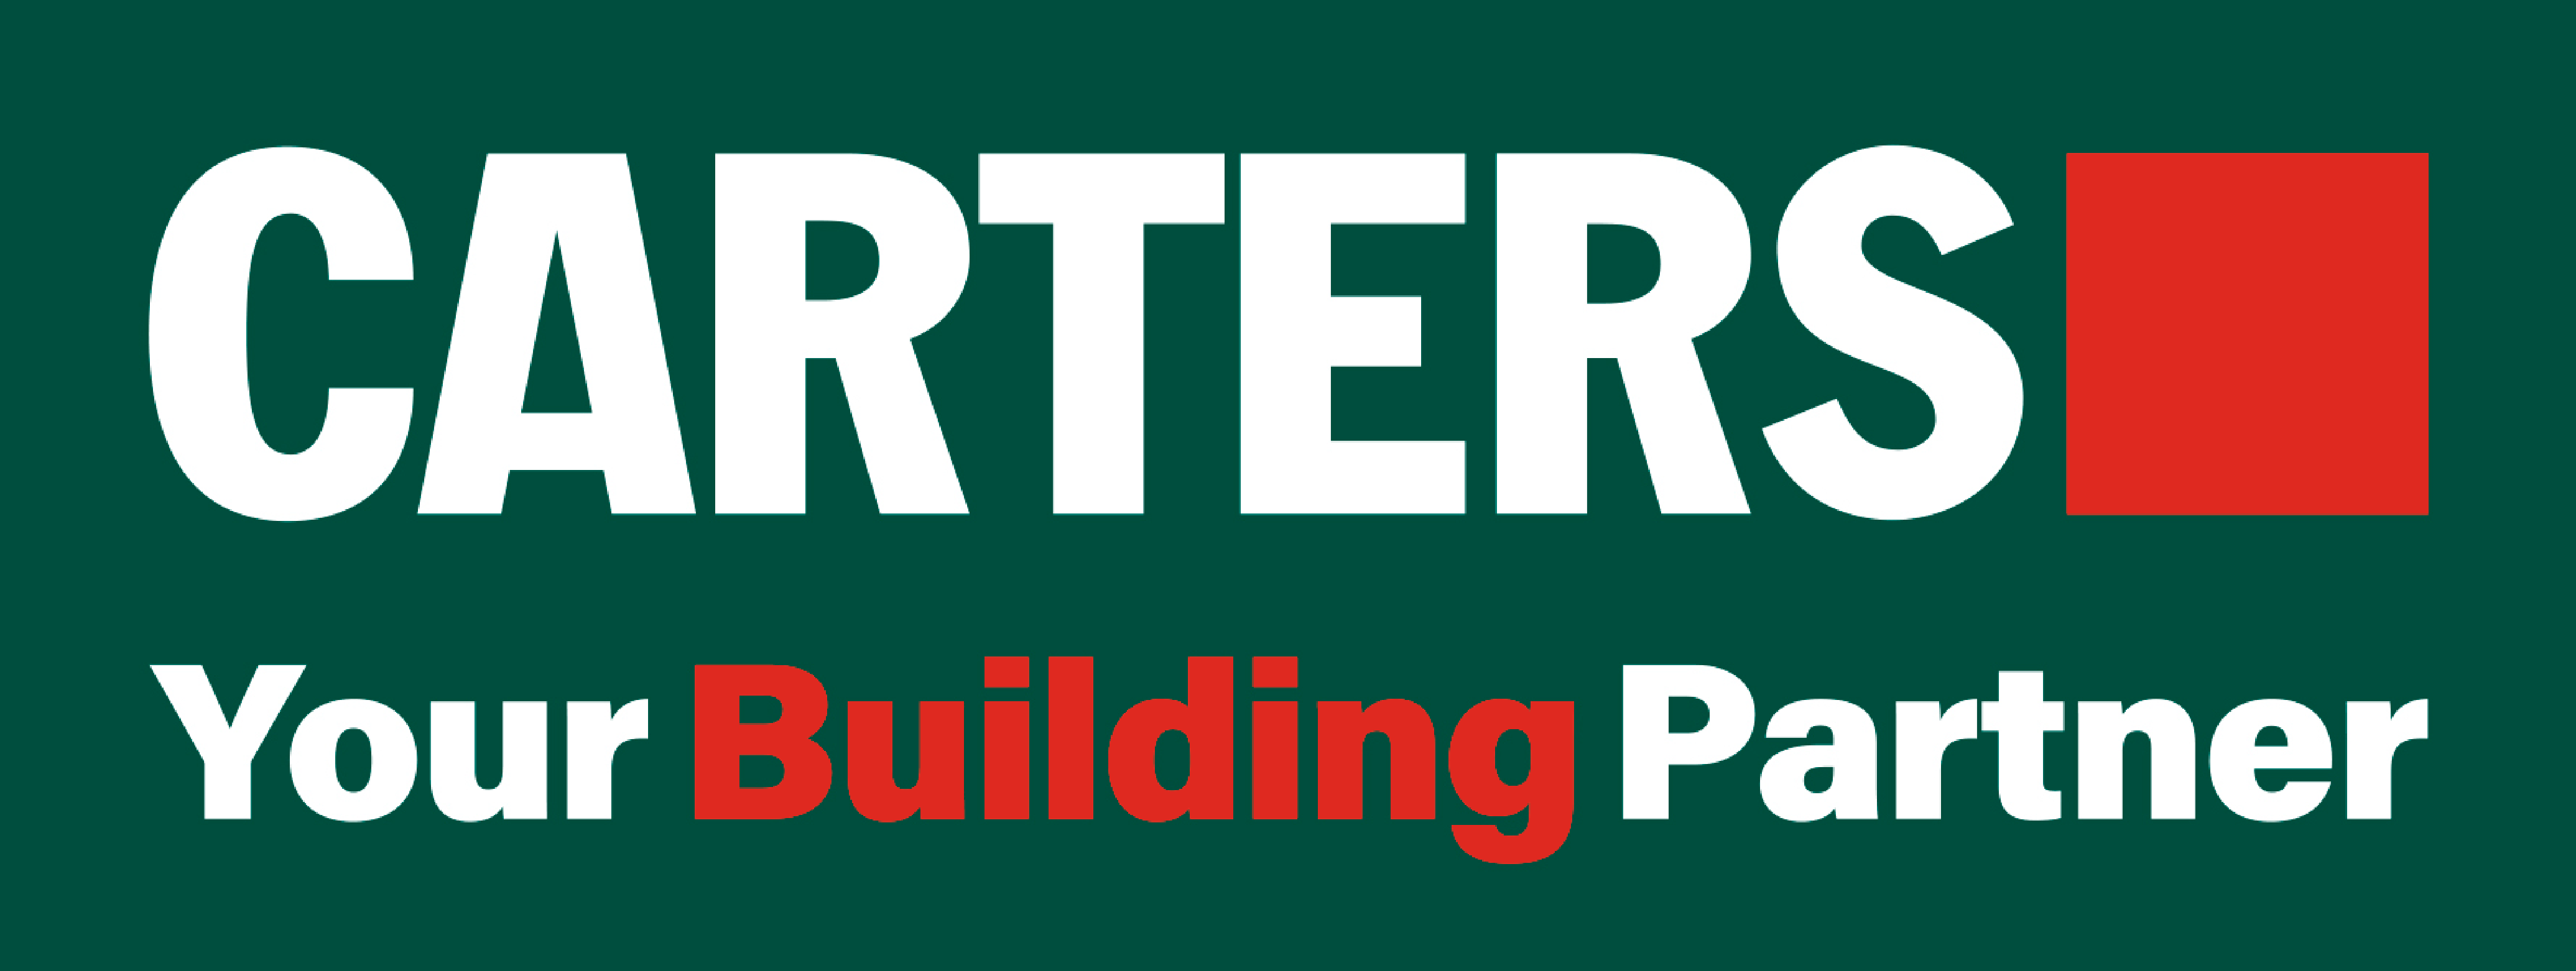 Carter's Logo - CARTERS - Your Building Partner - HOME